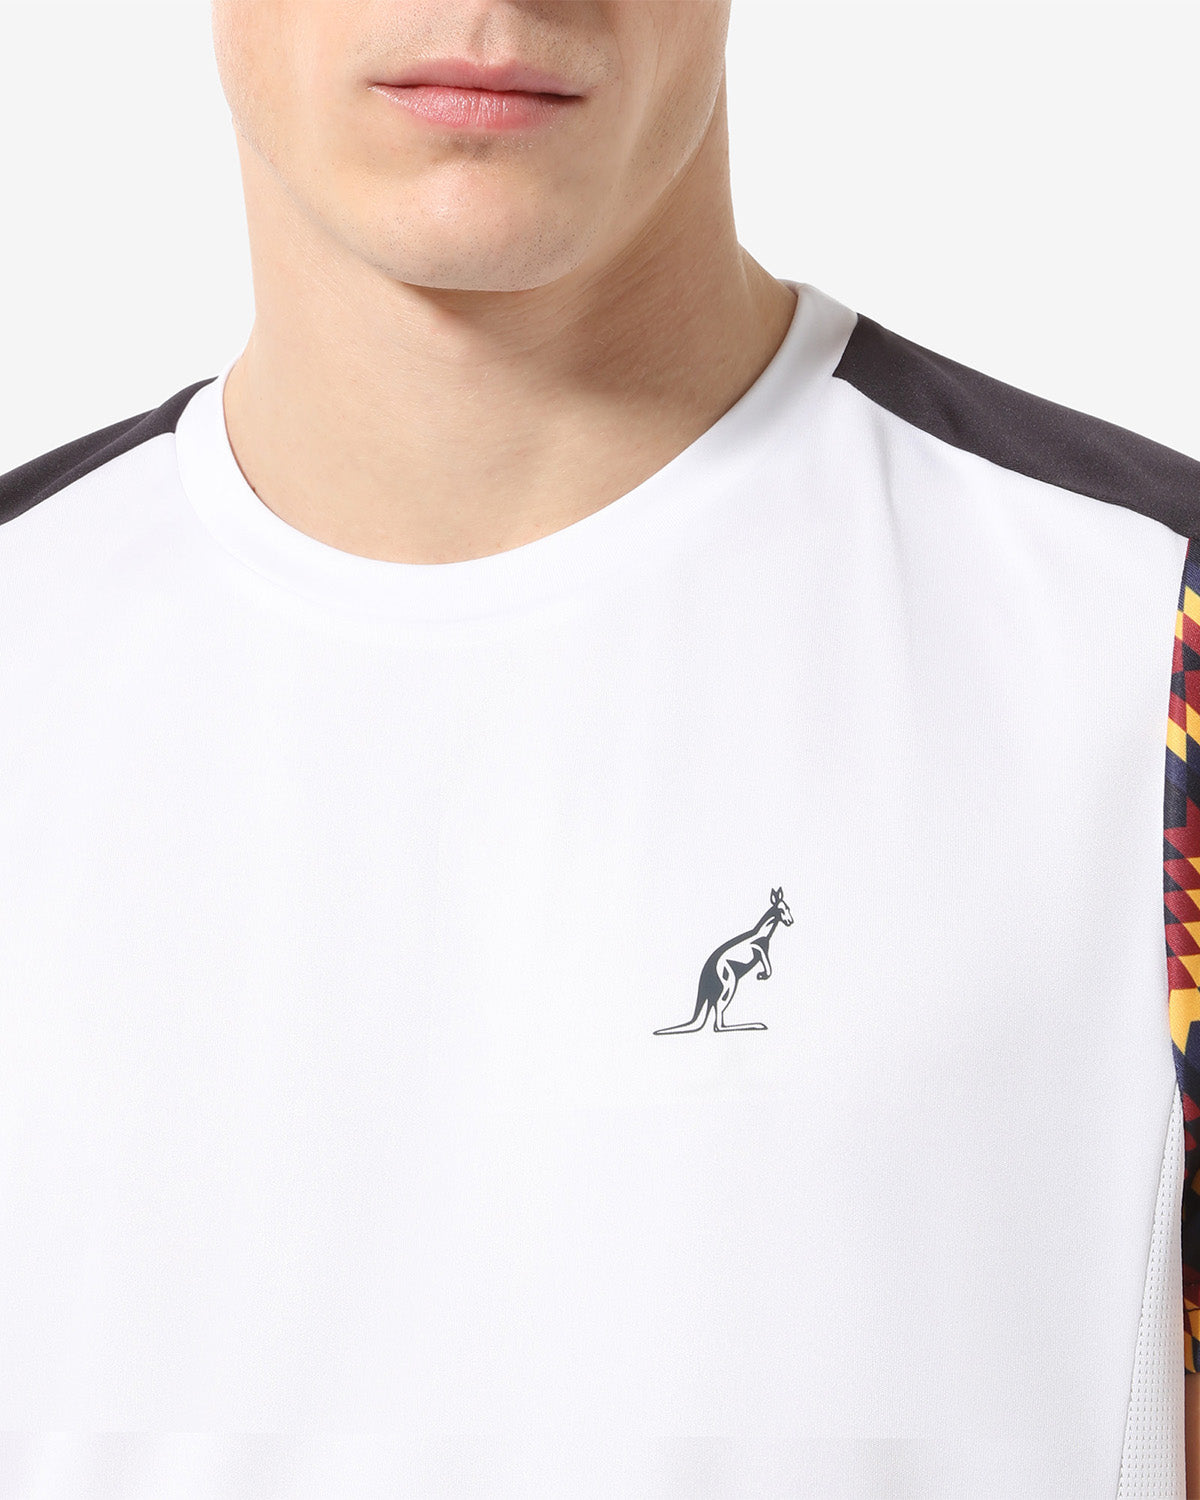 Ethno T-shirt: Australian Tennis 